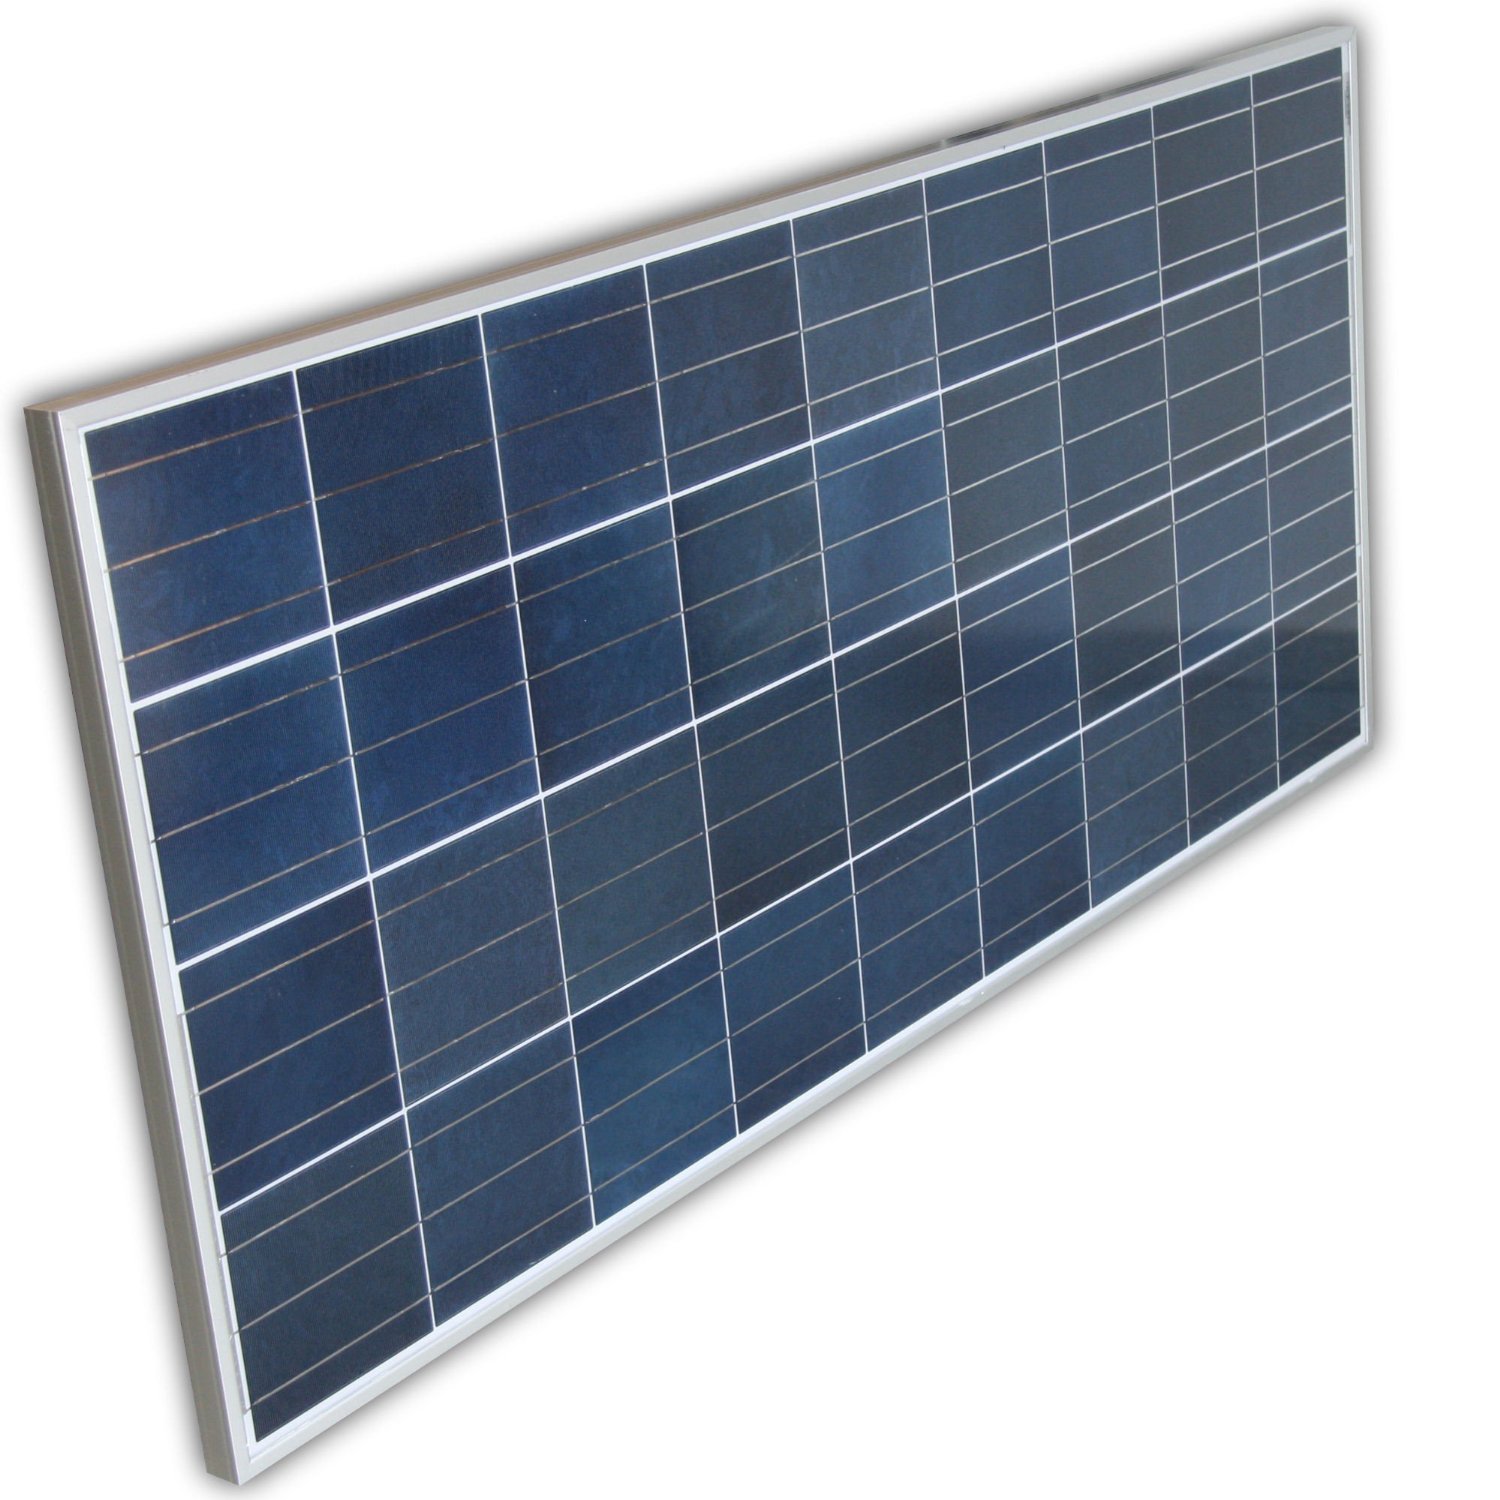 Jws – panel solar fotovoltaico barato